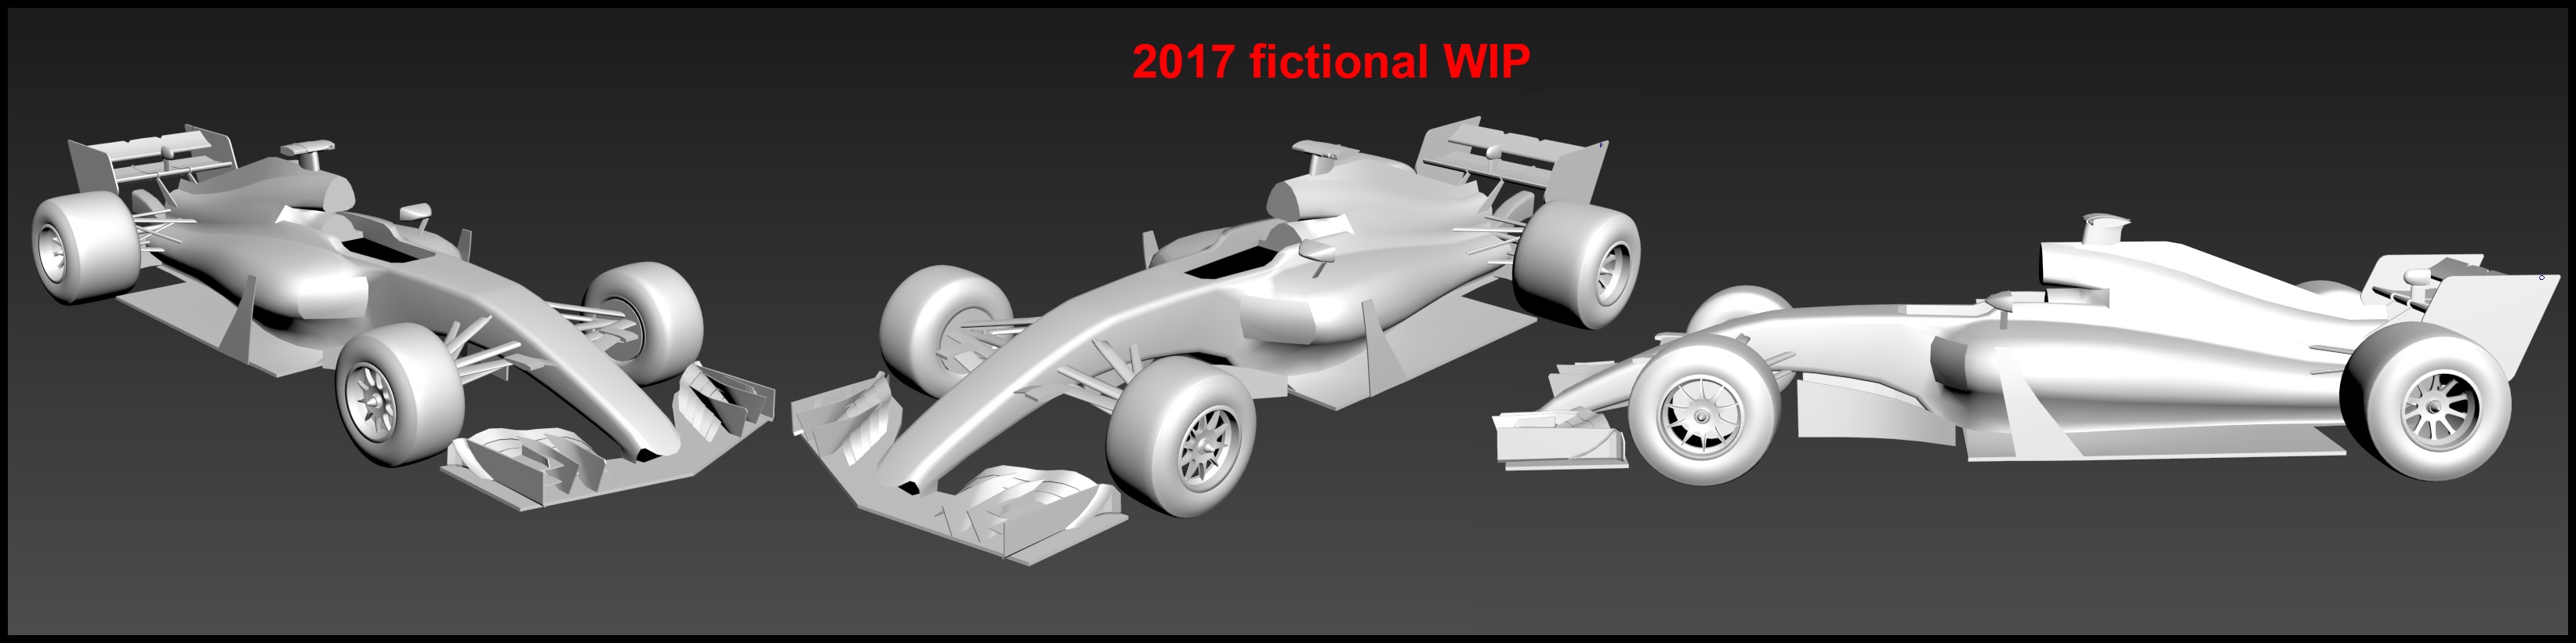 2017_fictional_WIP.jpg